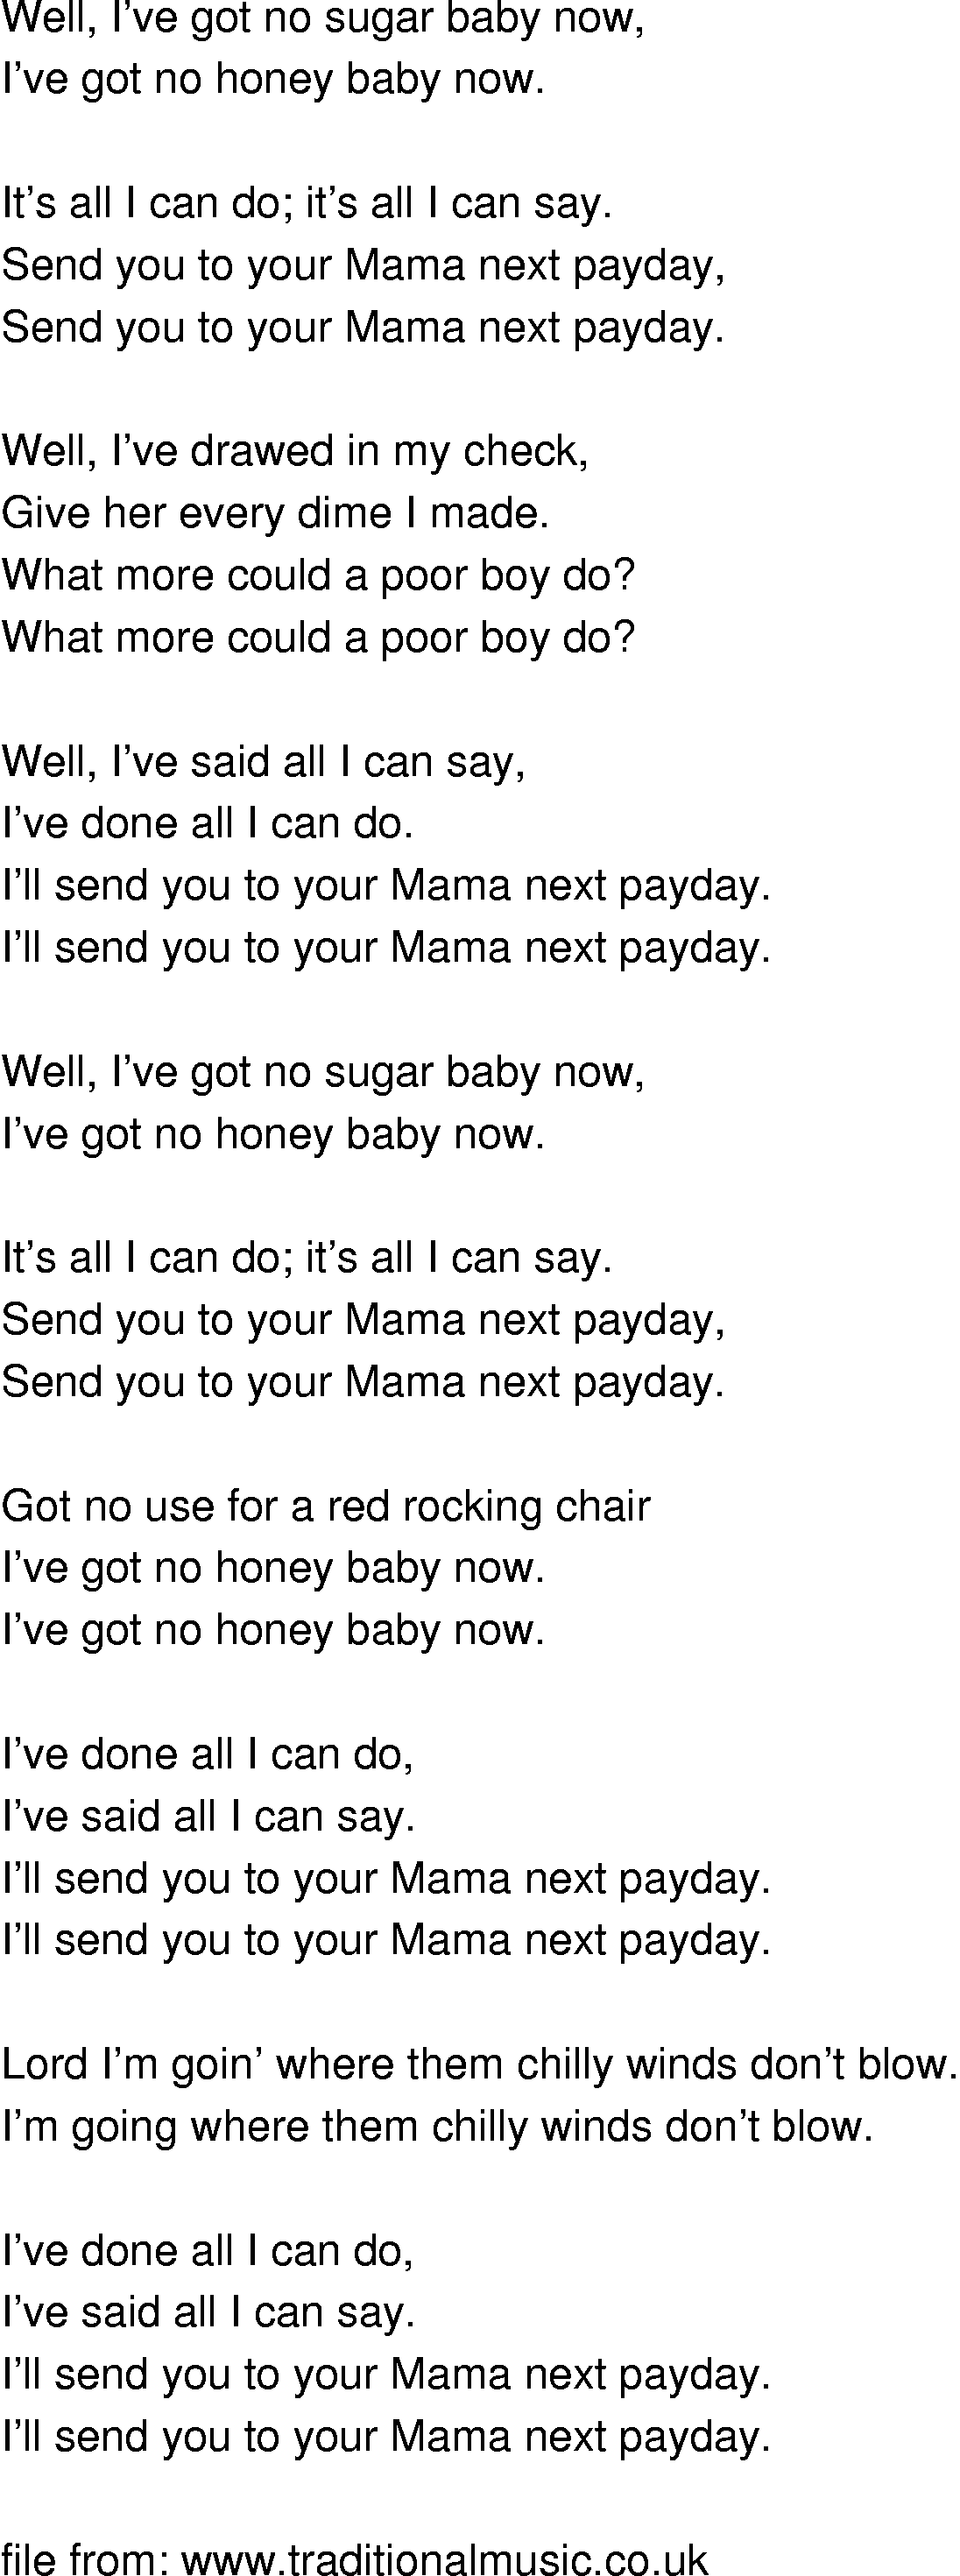 Old-Time (oldtimey) Song Lyrics - got no sugar baby now